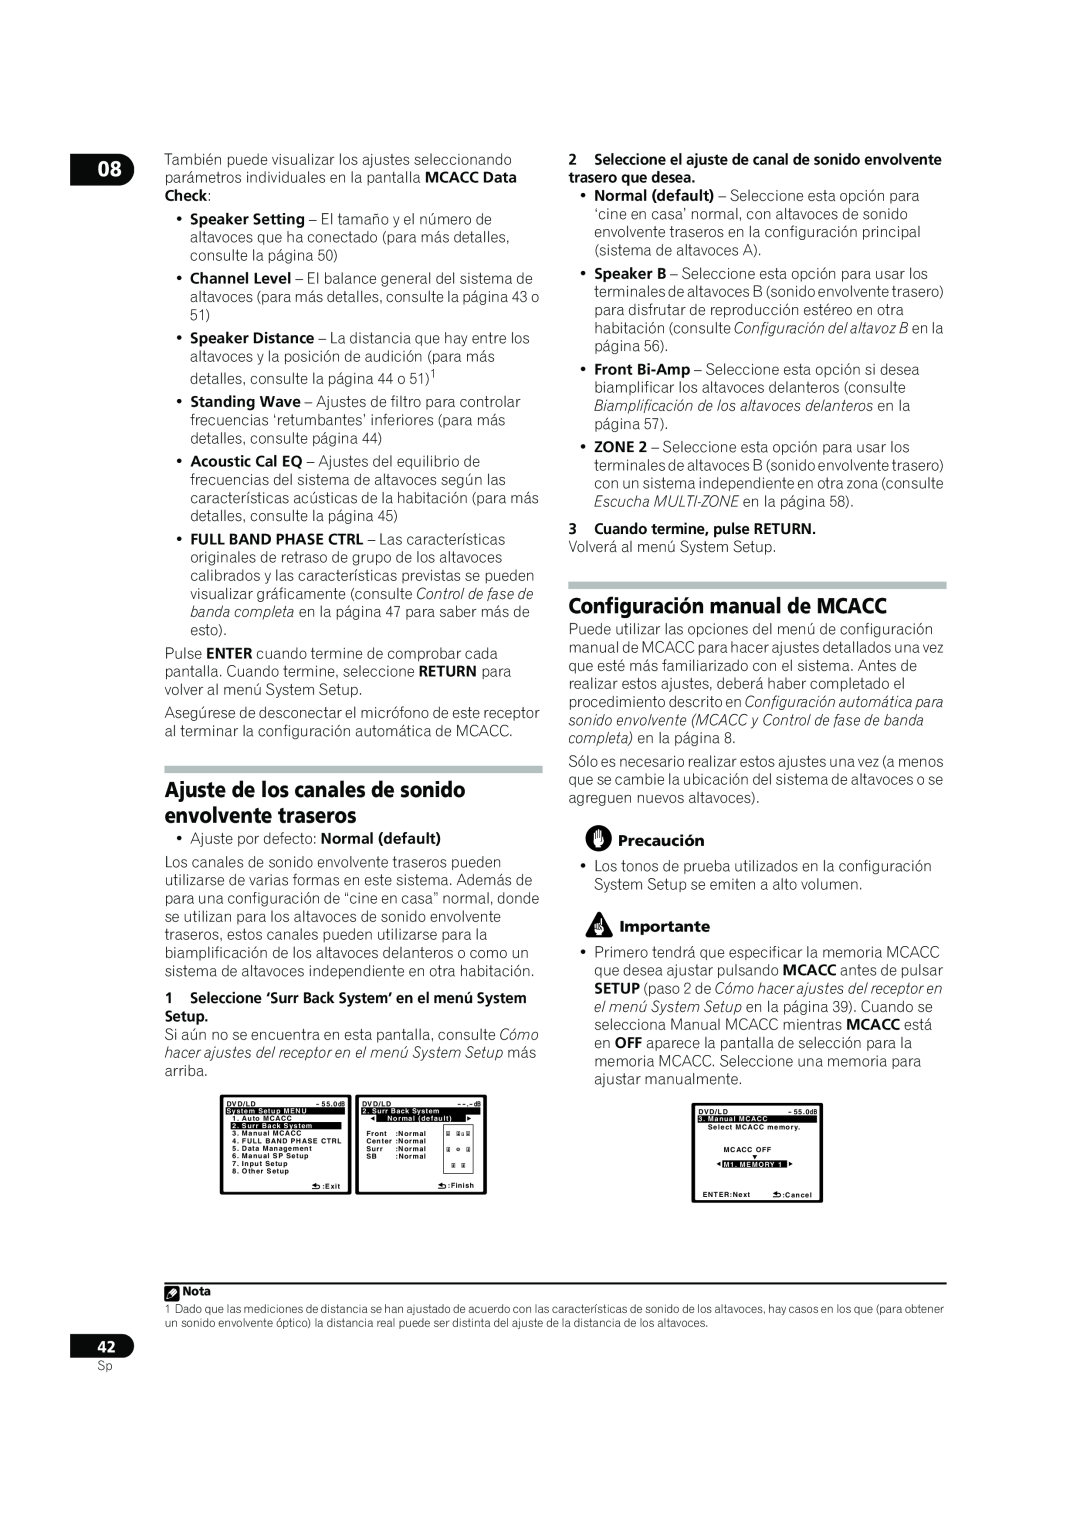 Bernina VSX-LX60, VSX-LX70 Configuración manual de MCACC, 3Cuando termine, pulse RETURN, Precaución, Importante 